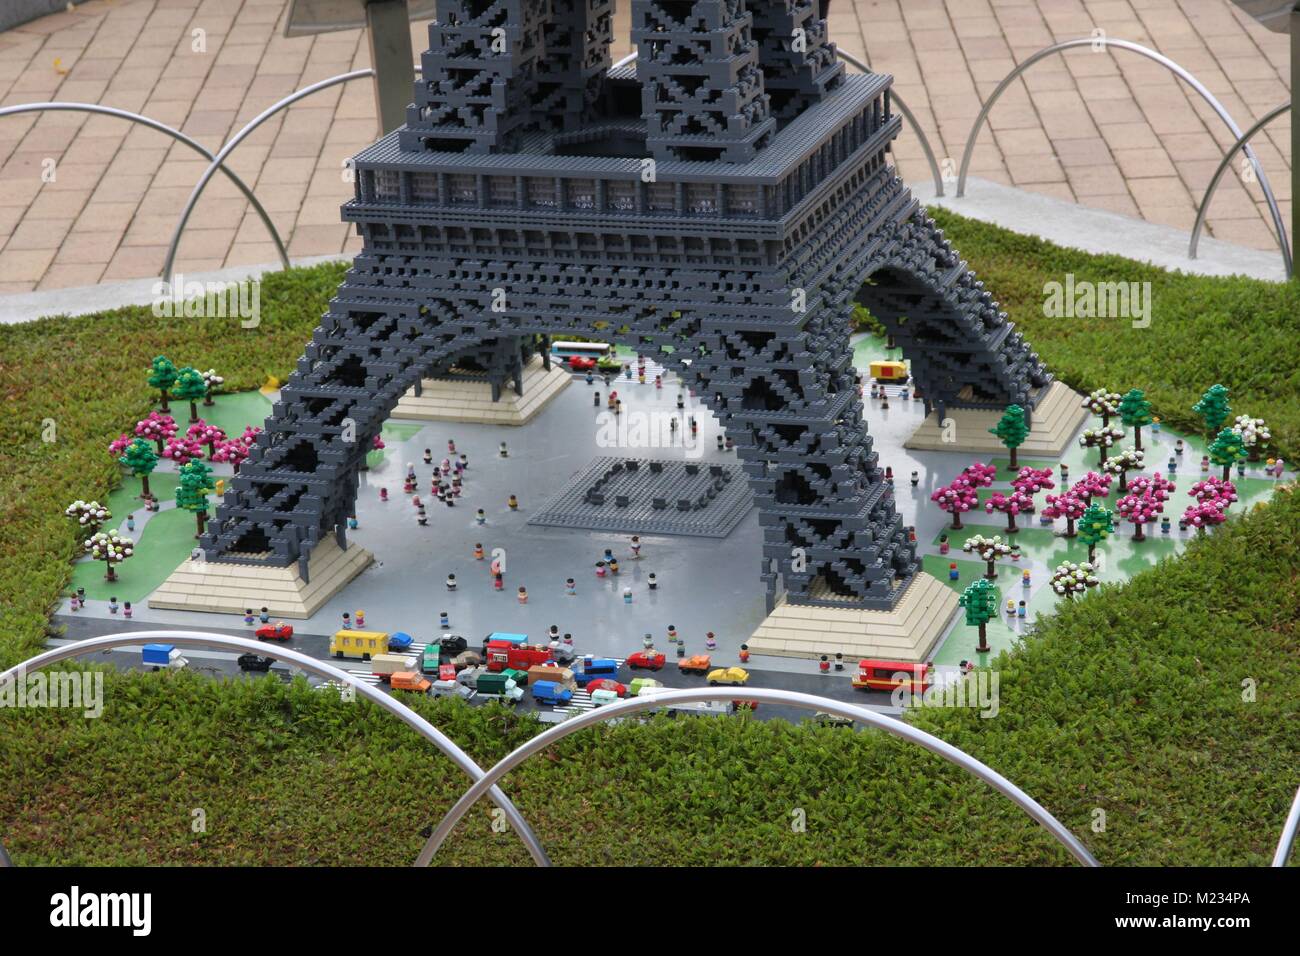 Lego Torre Eiffel - Legoland a Billund, Danimarca Foto stock - Alamy